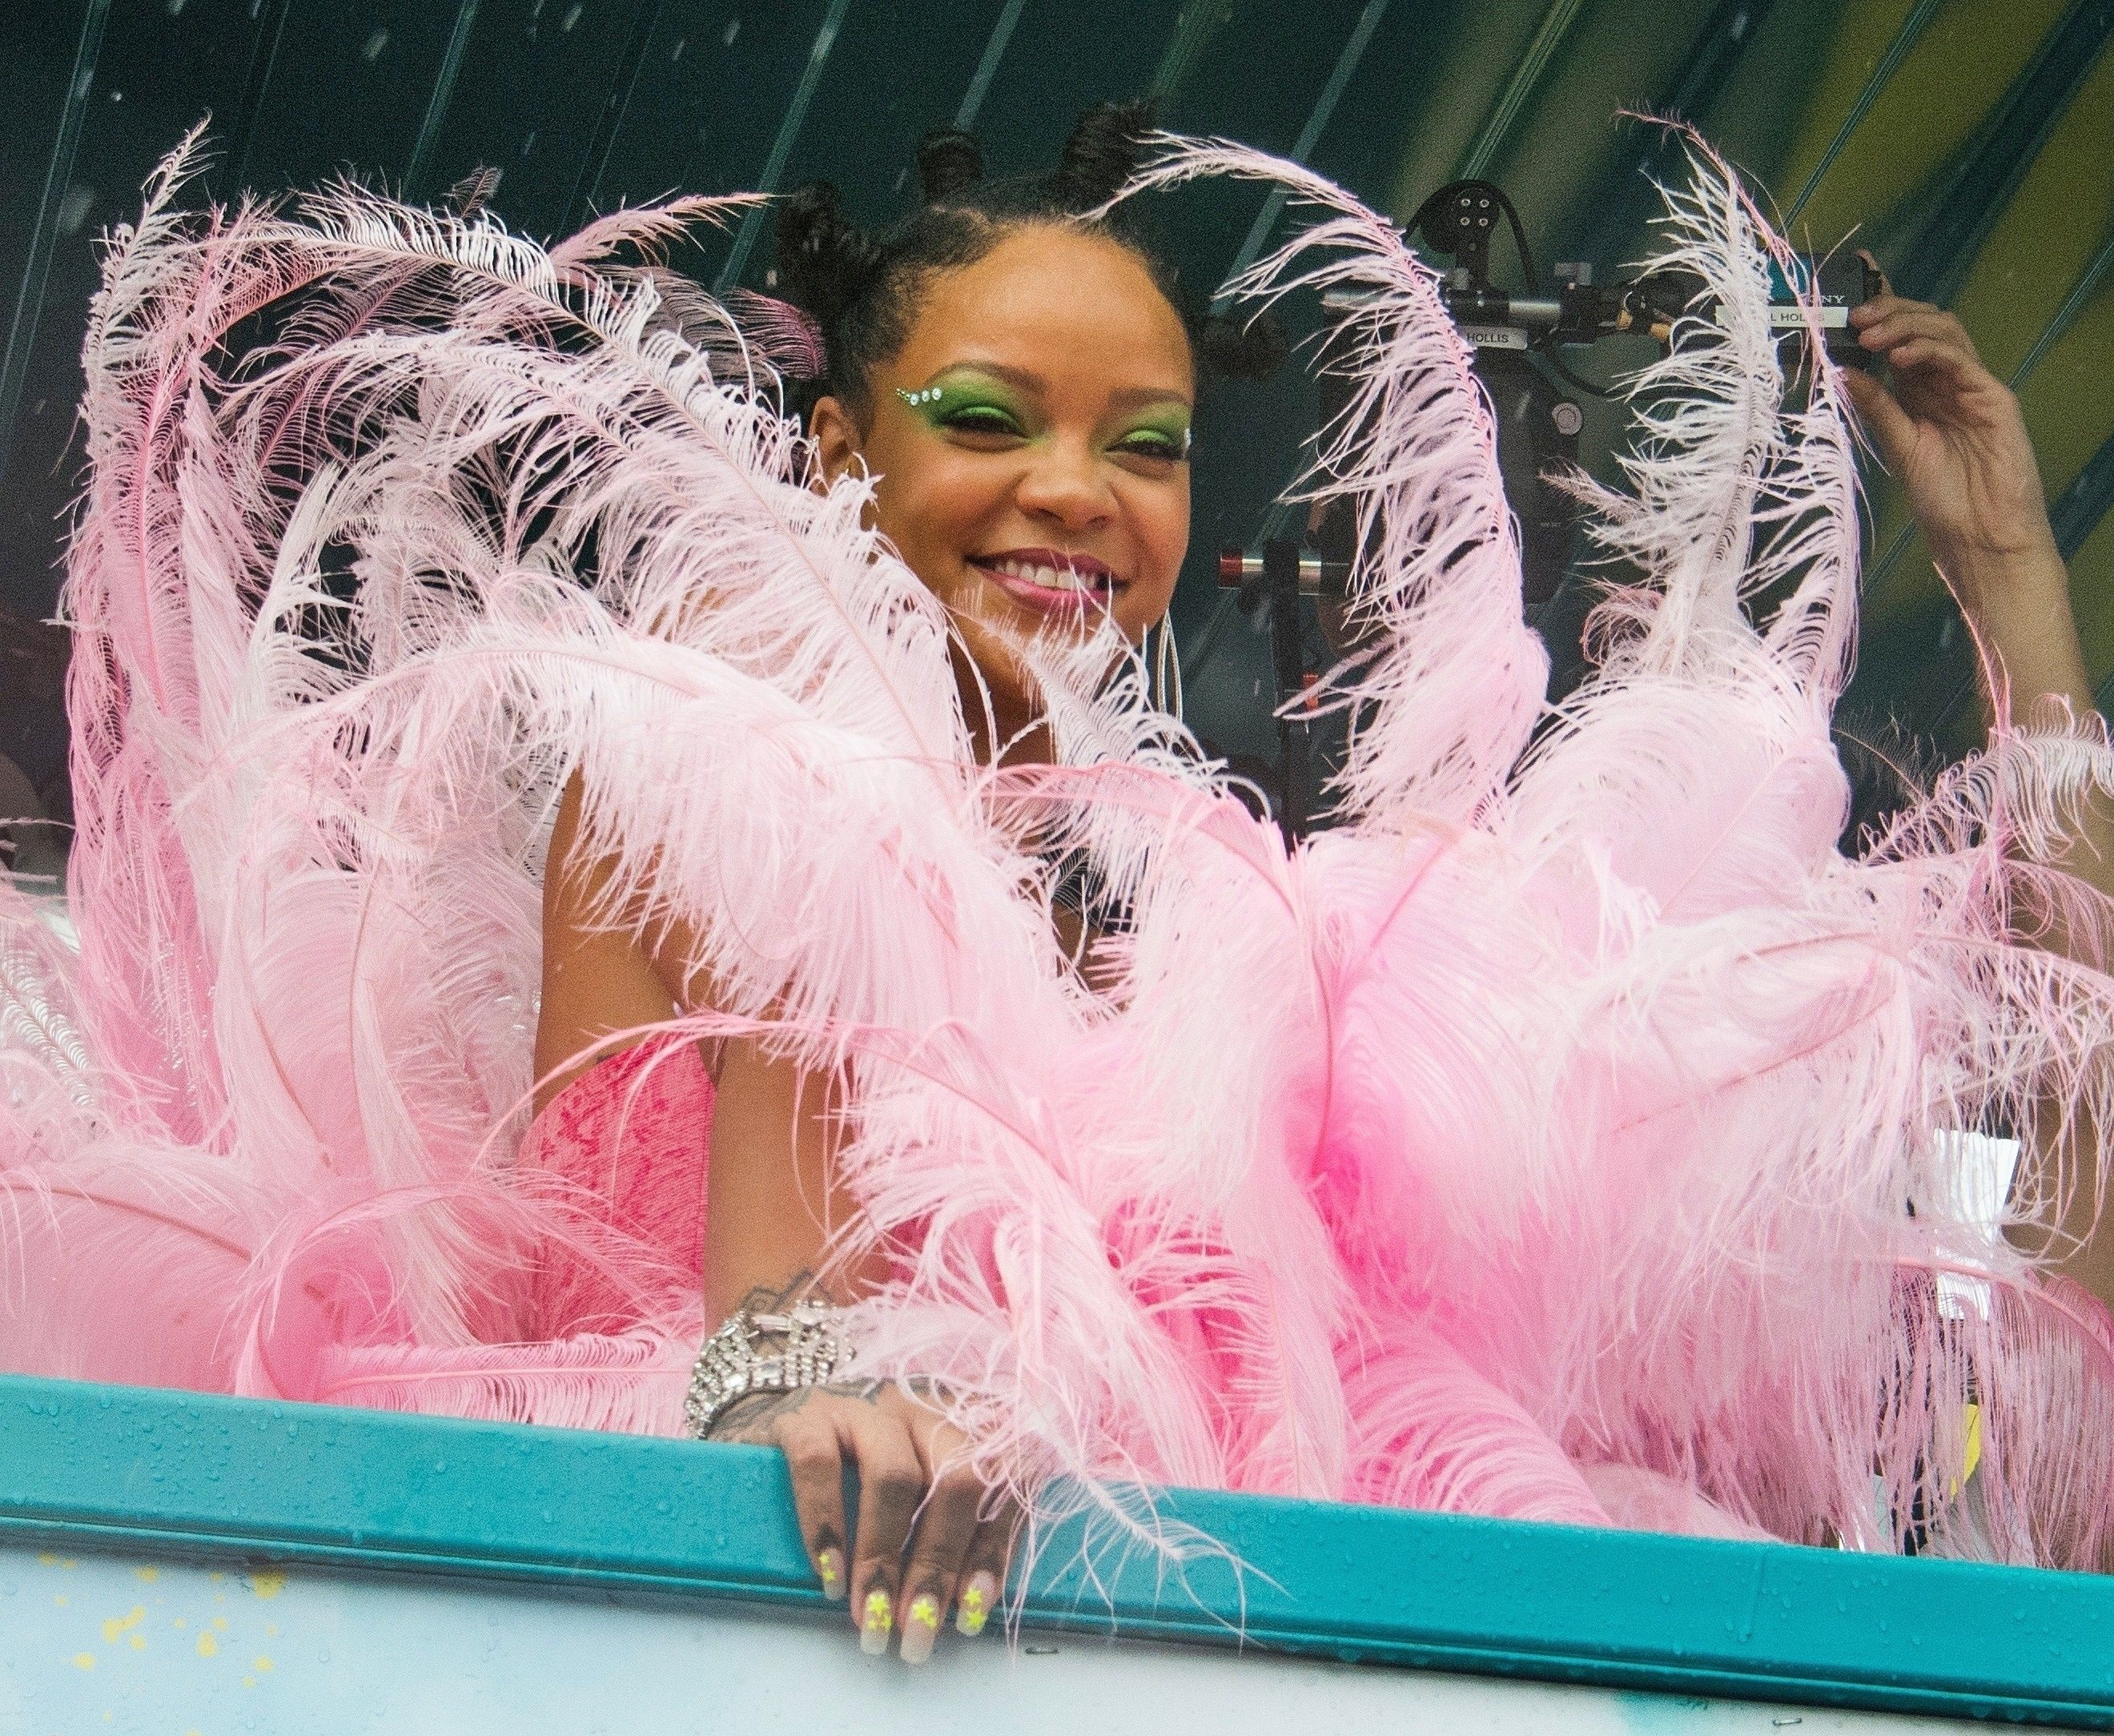 Rihanna Ditches Tiny Purses With a Giant Bottega Clutch